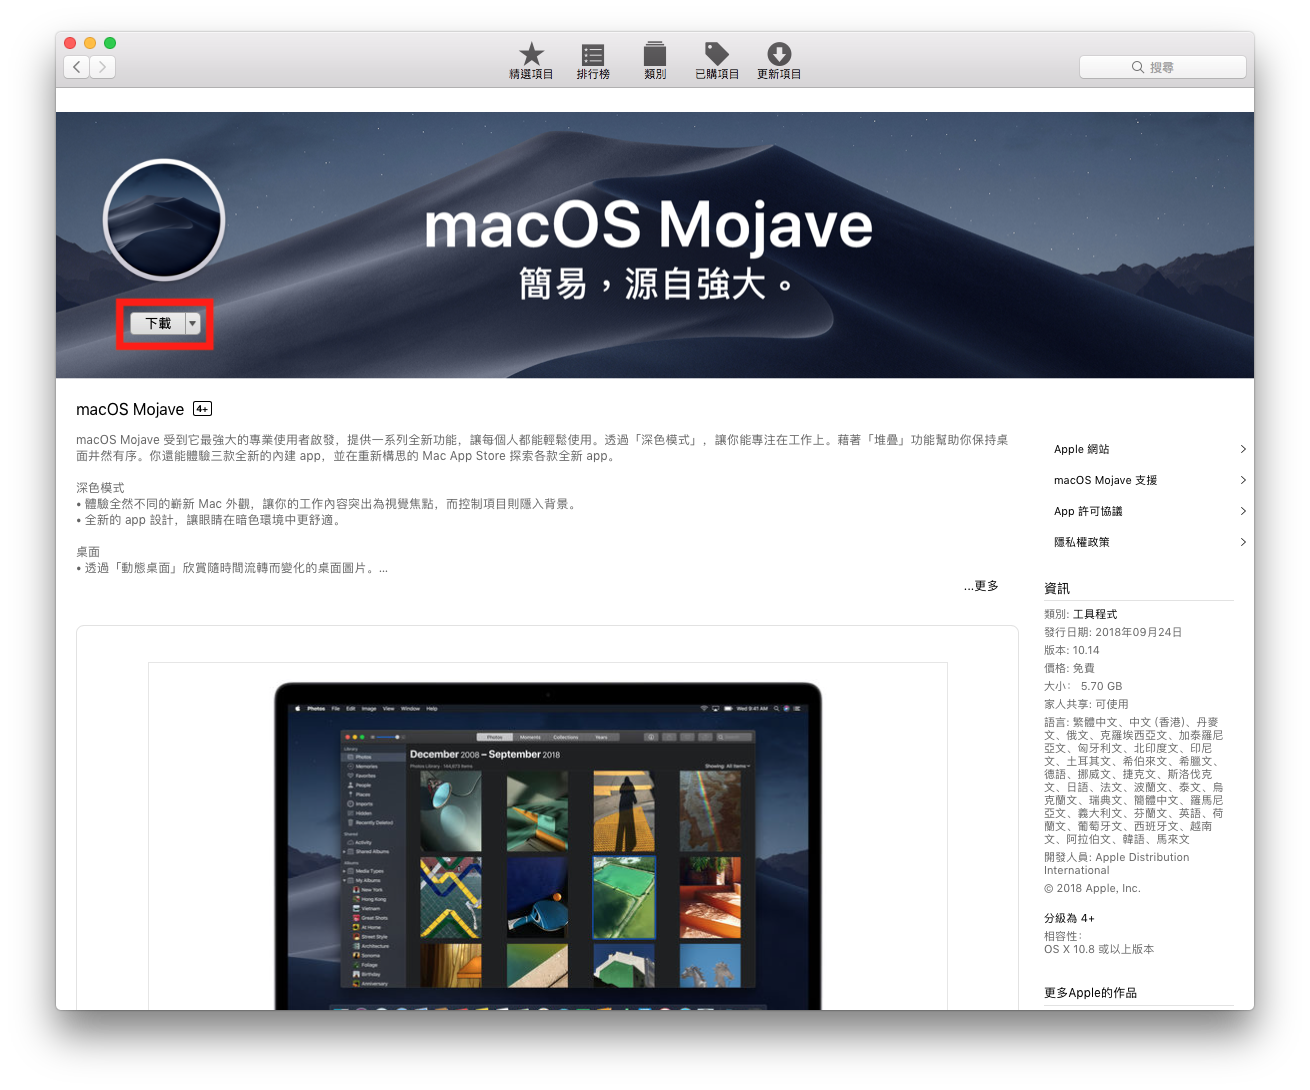 macOS 10.14